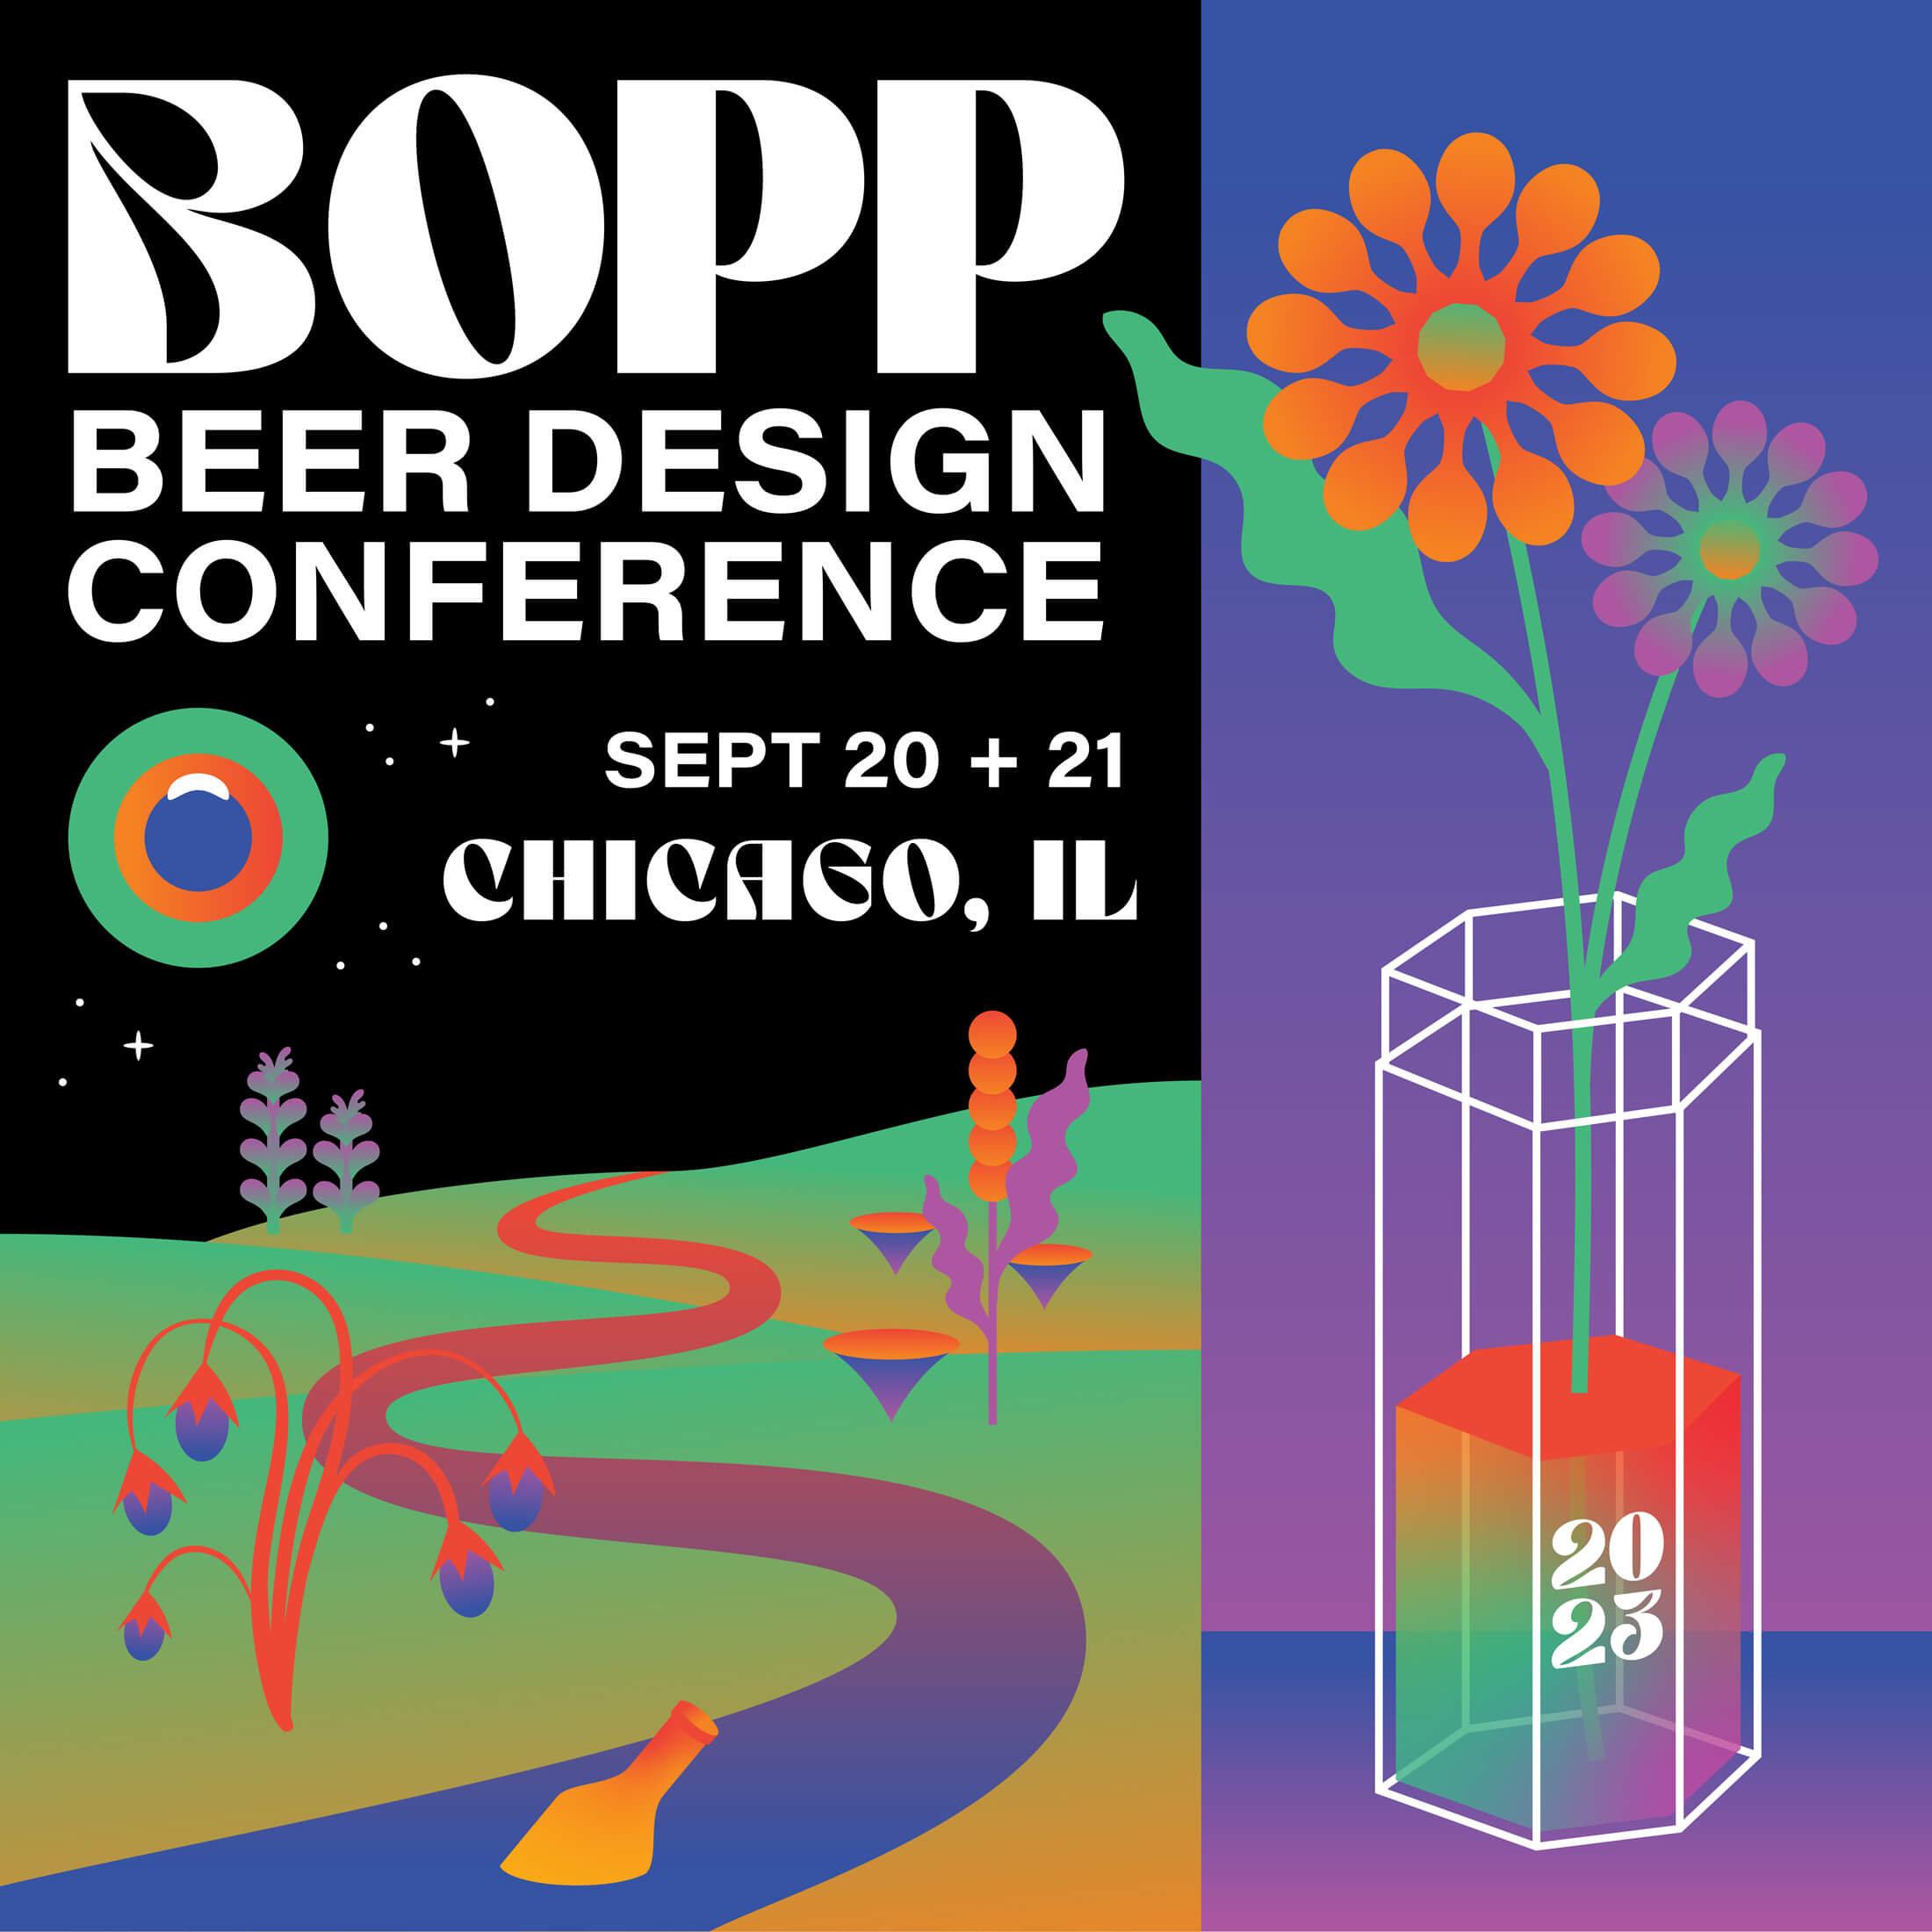 Bopp Beer Design Conference